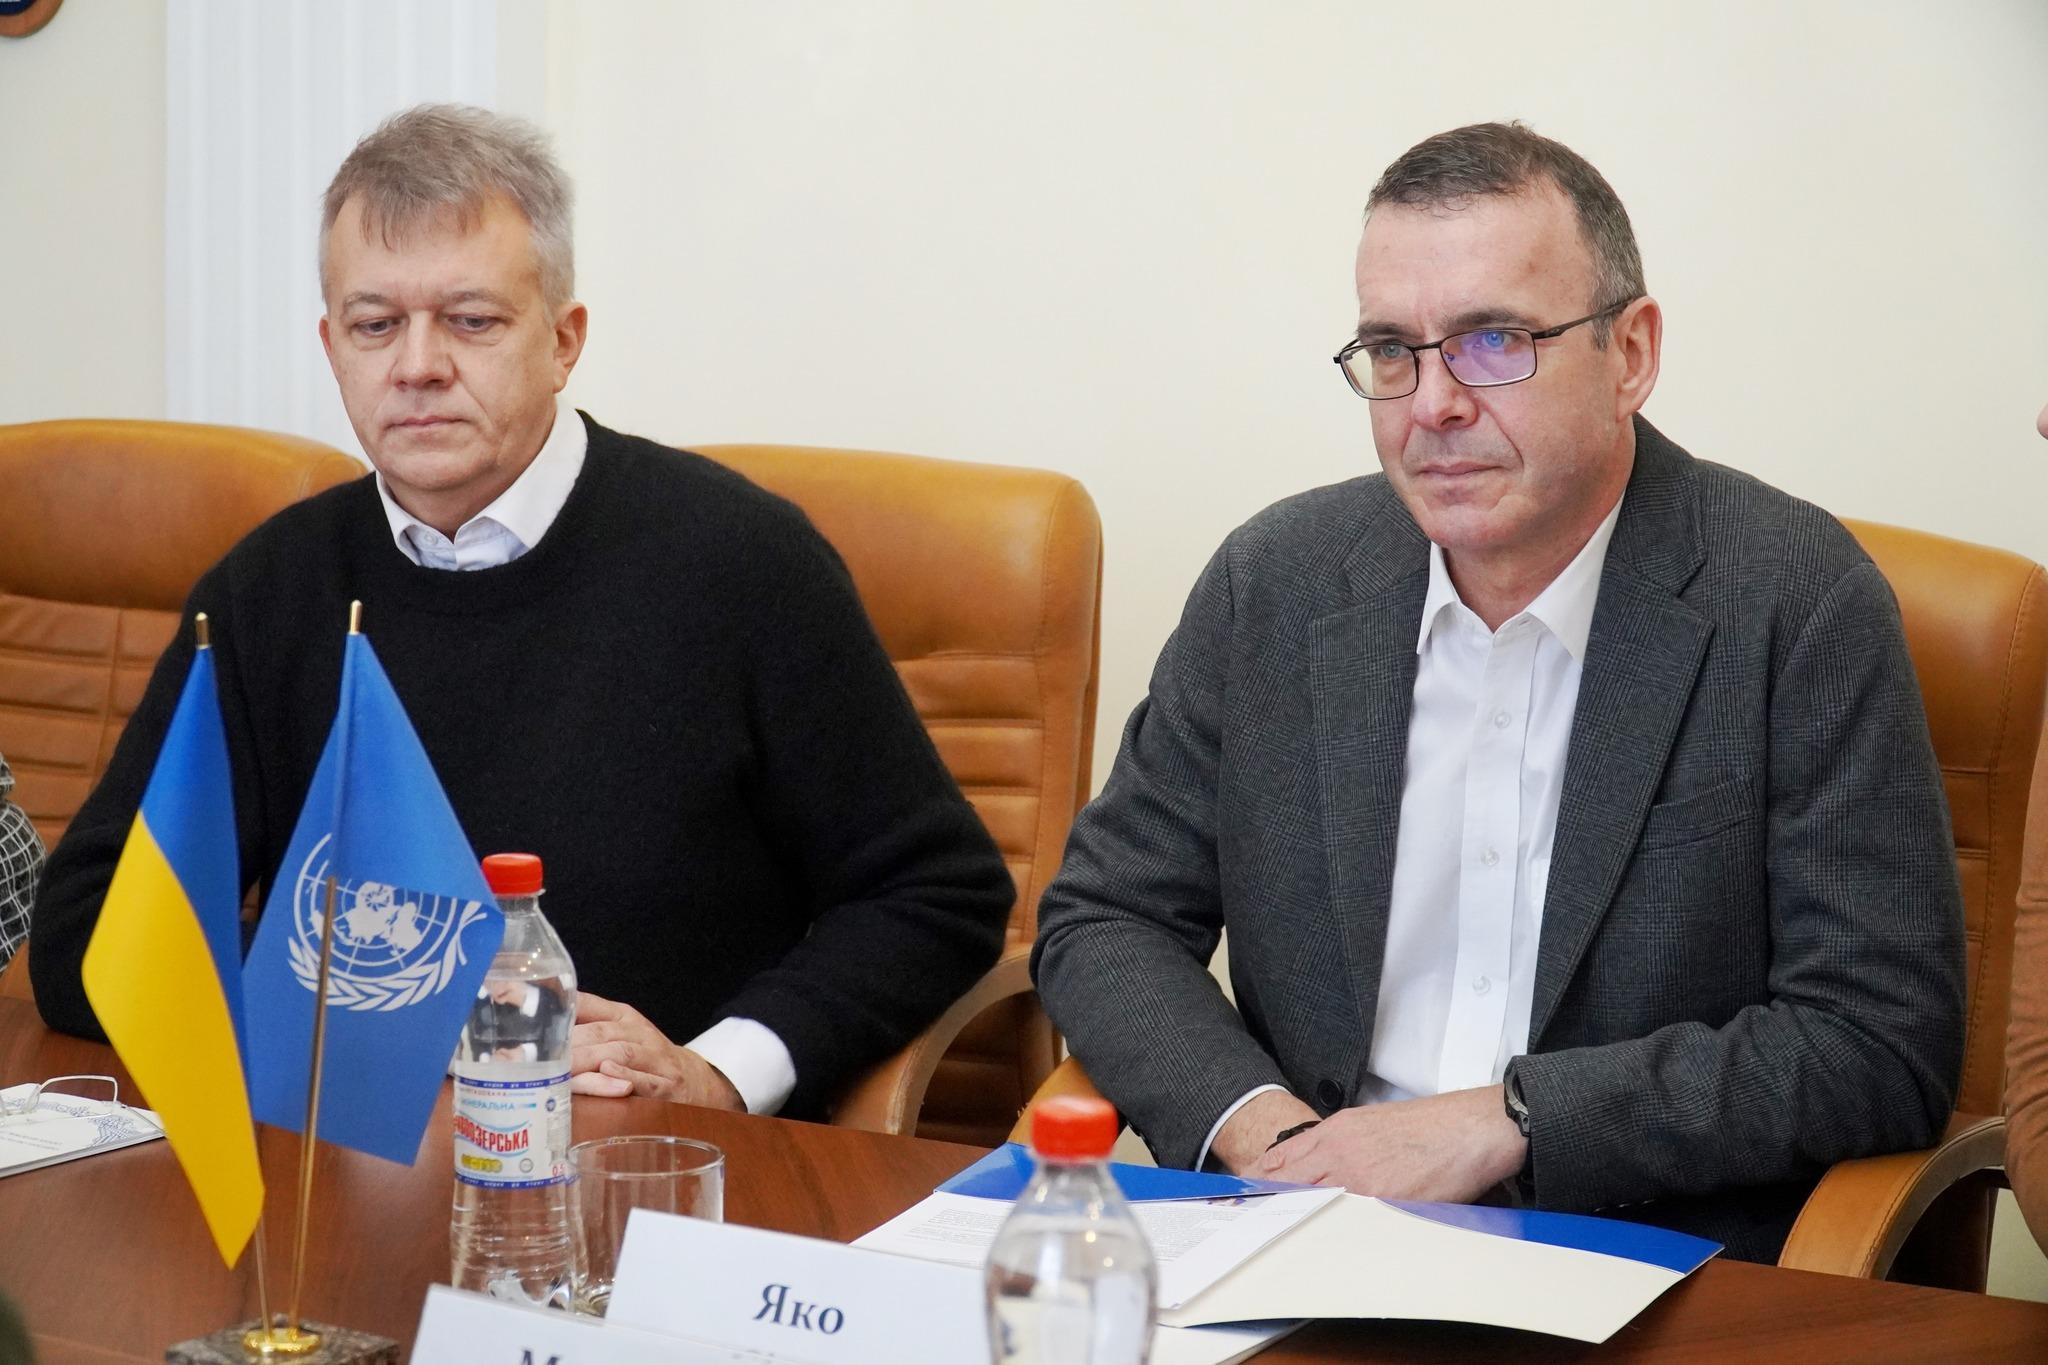 The UN Development Program Office will be opened in Odessa